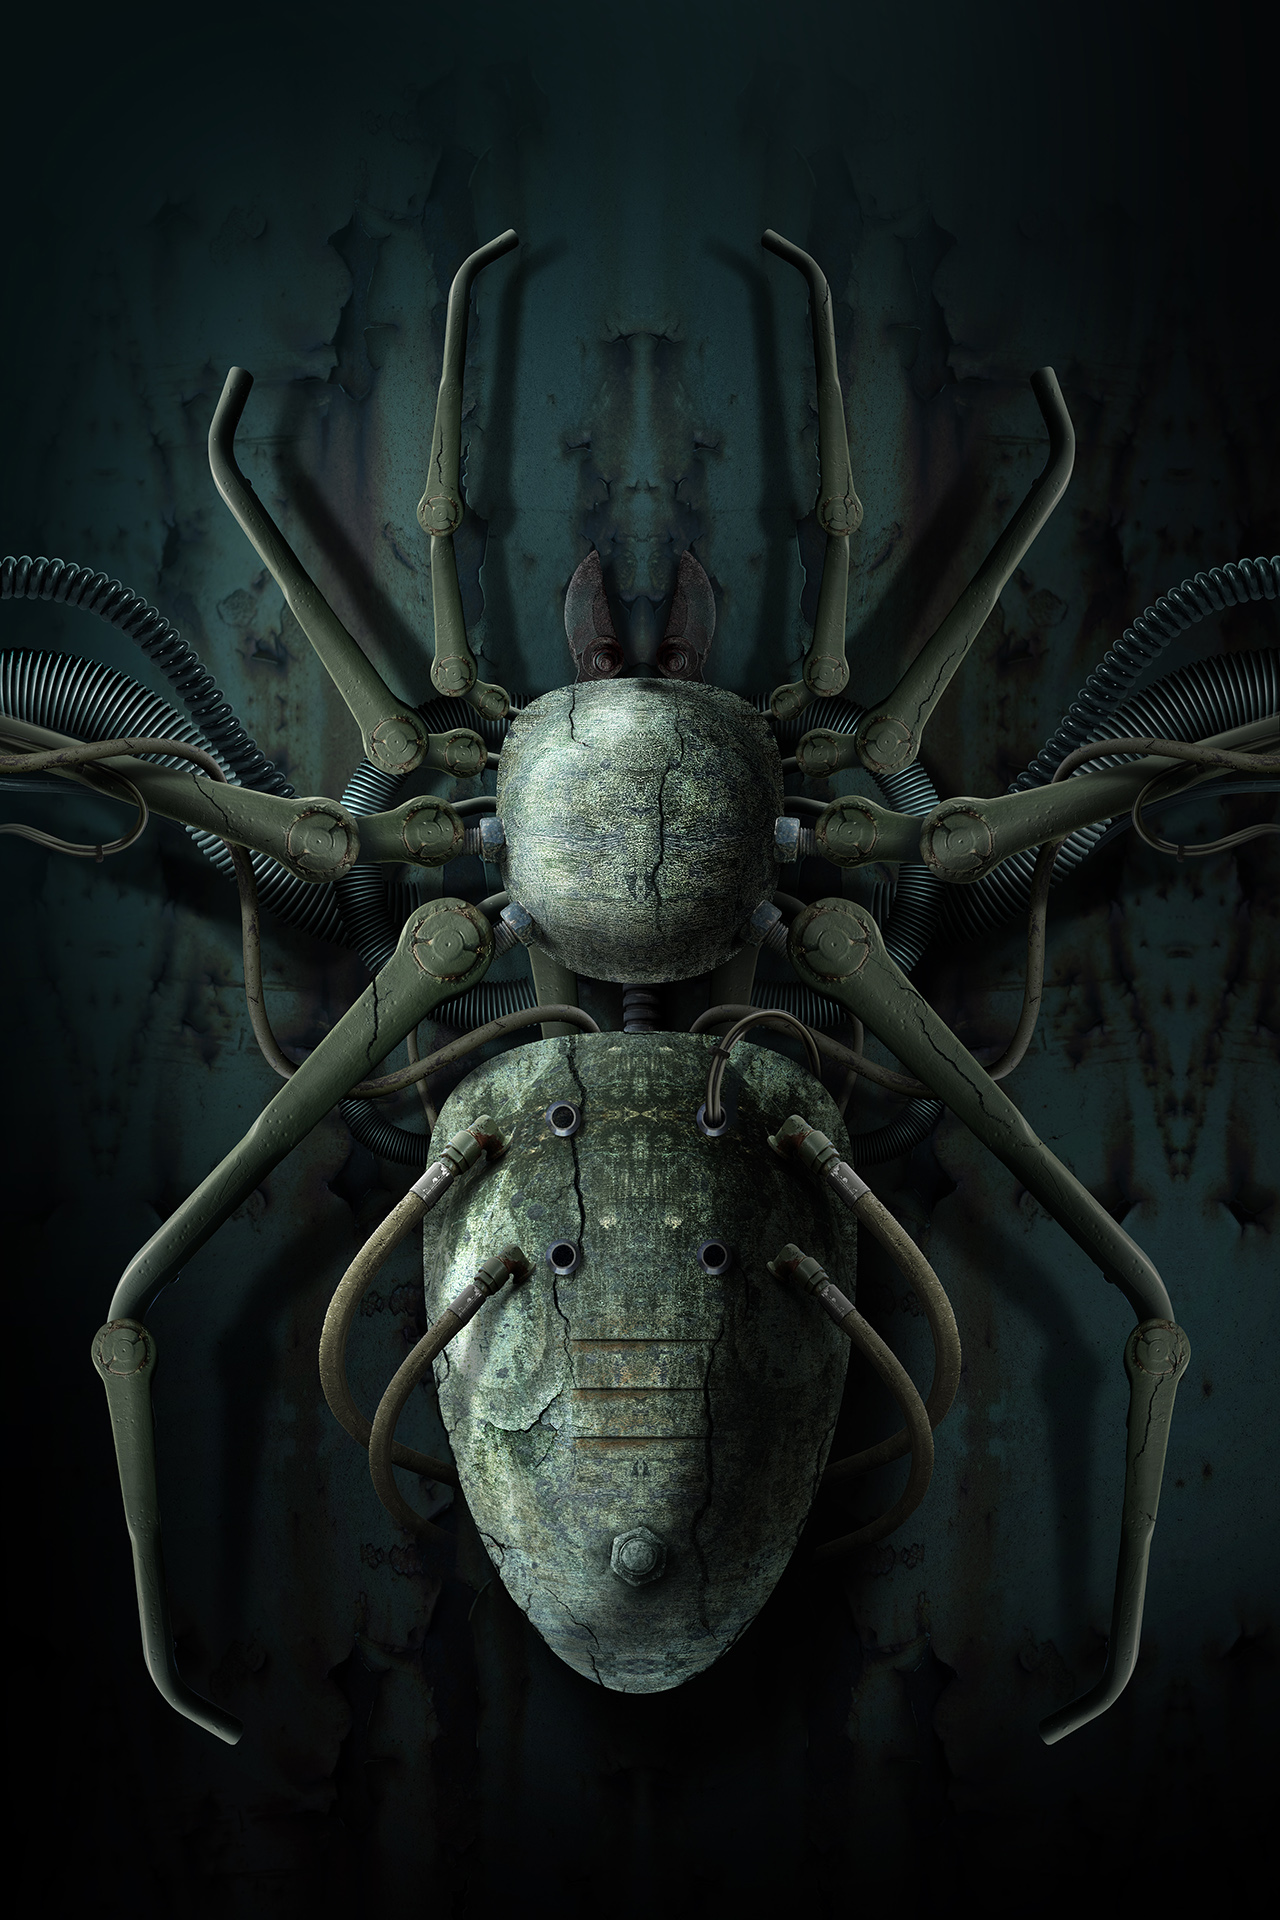 Dark Creepy Mechanical Spider – 1280px